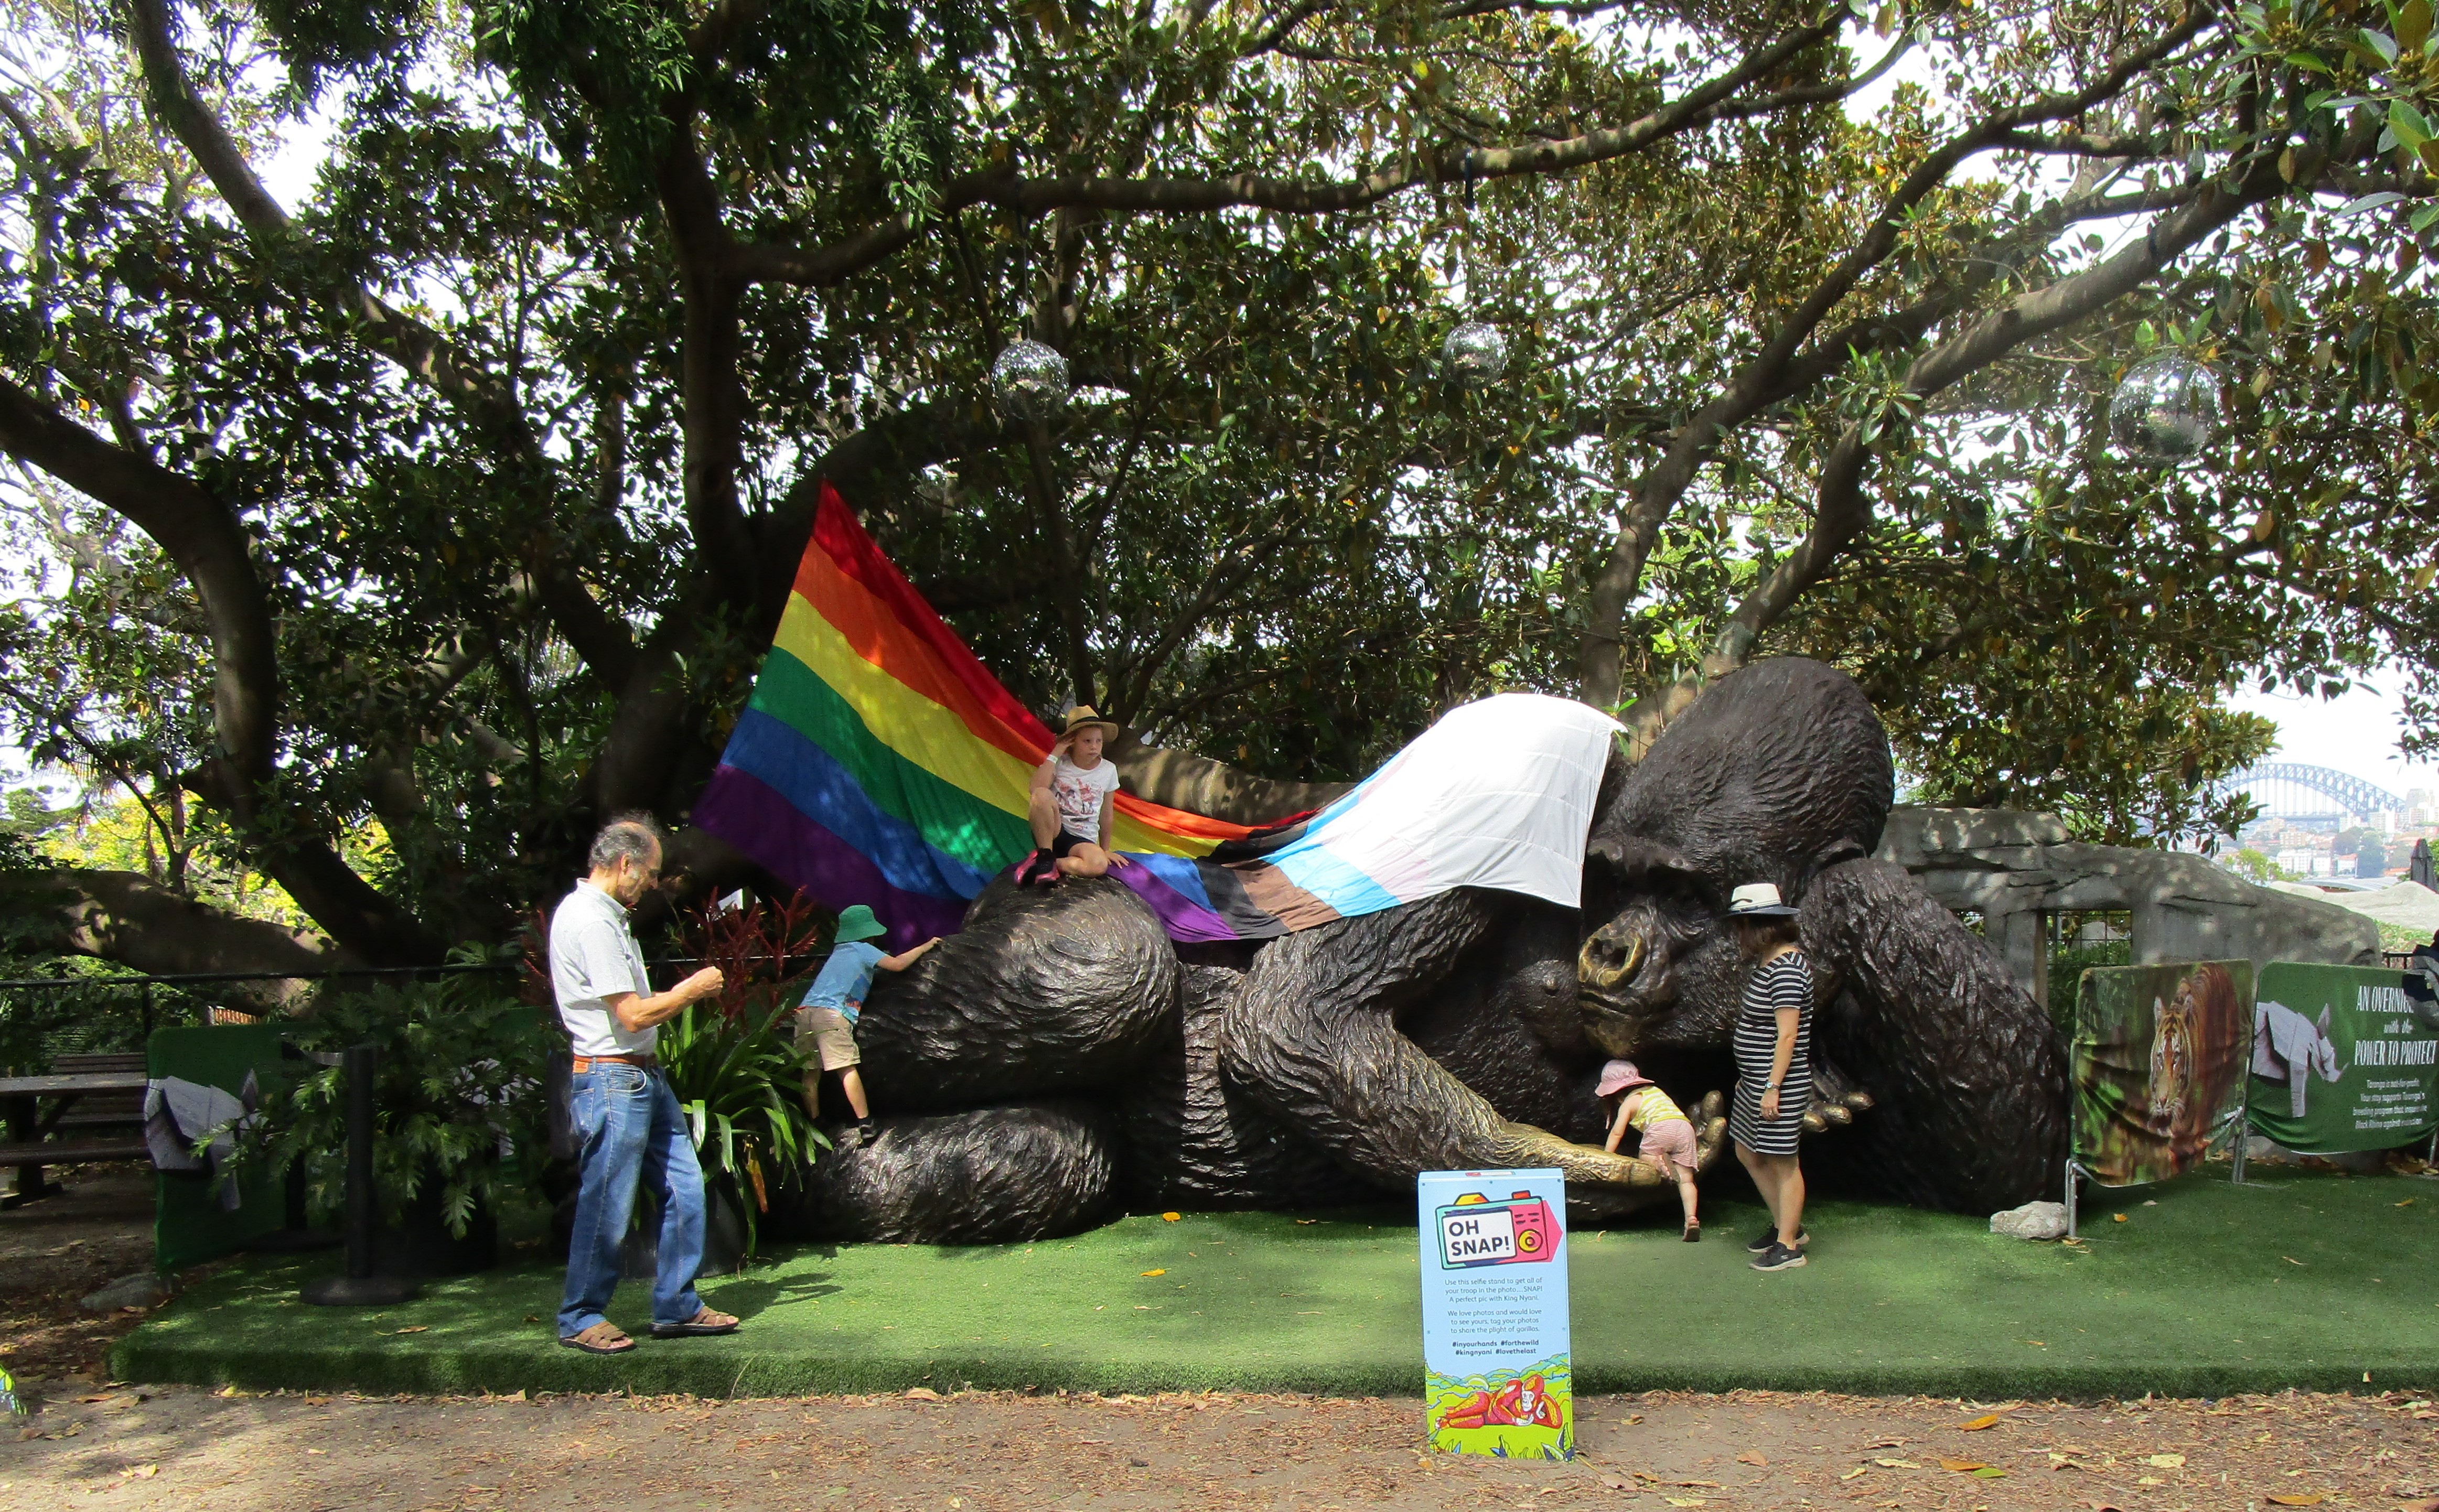 Taronga-Zoo-16---Gorilla-statue-for-kids-to-climb-on.JPG